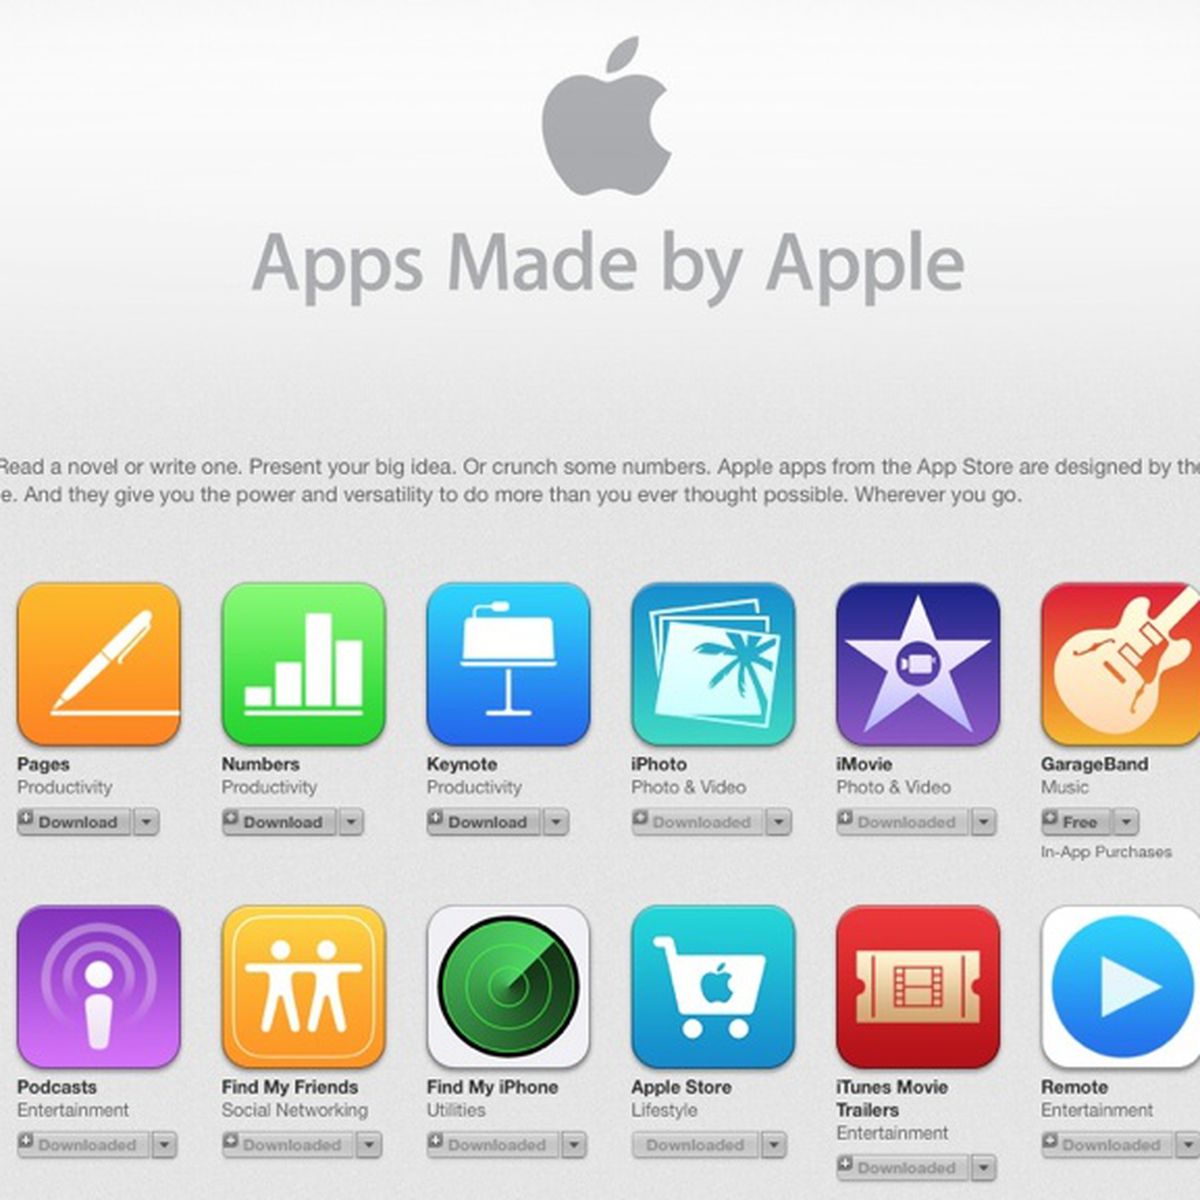 Apple App